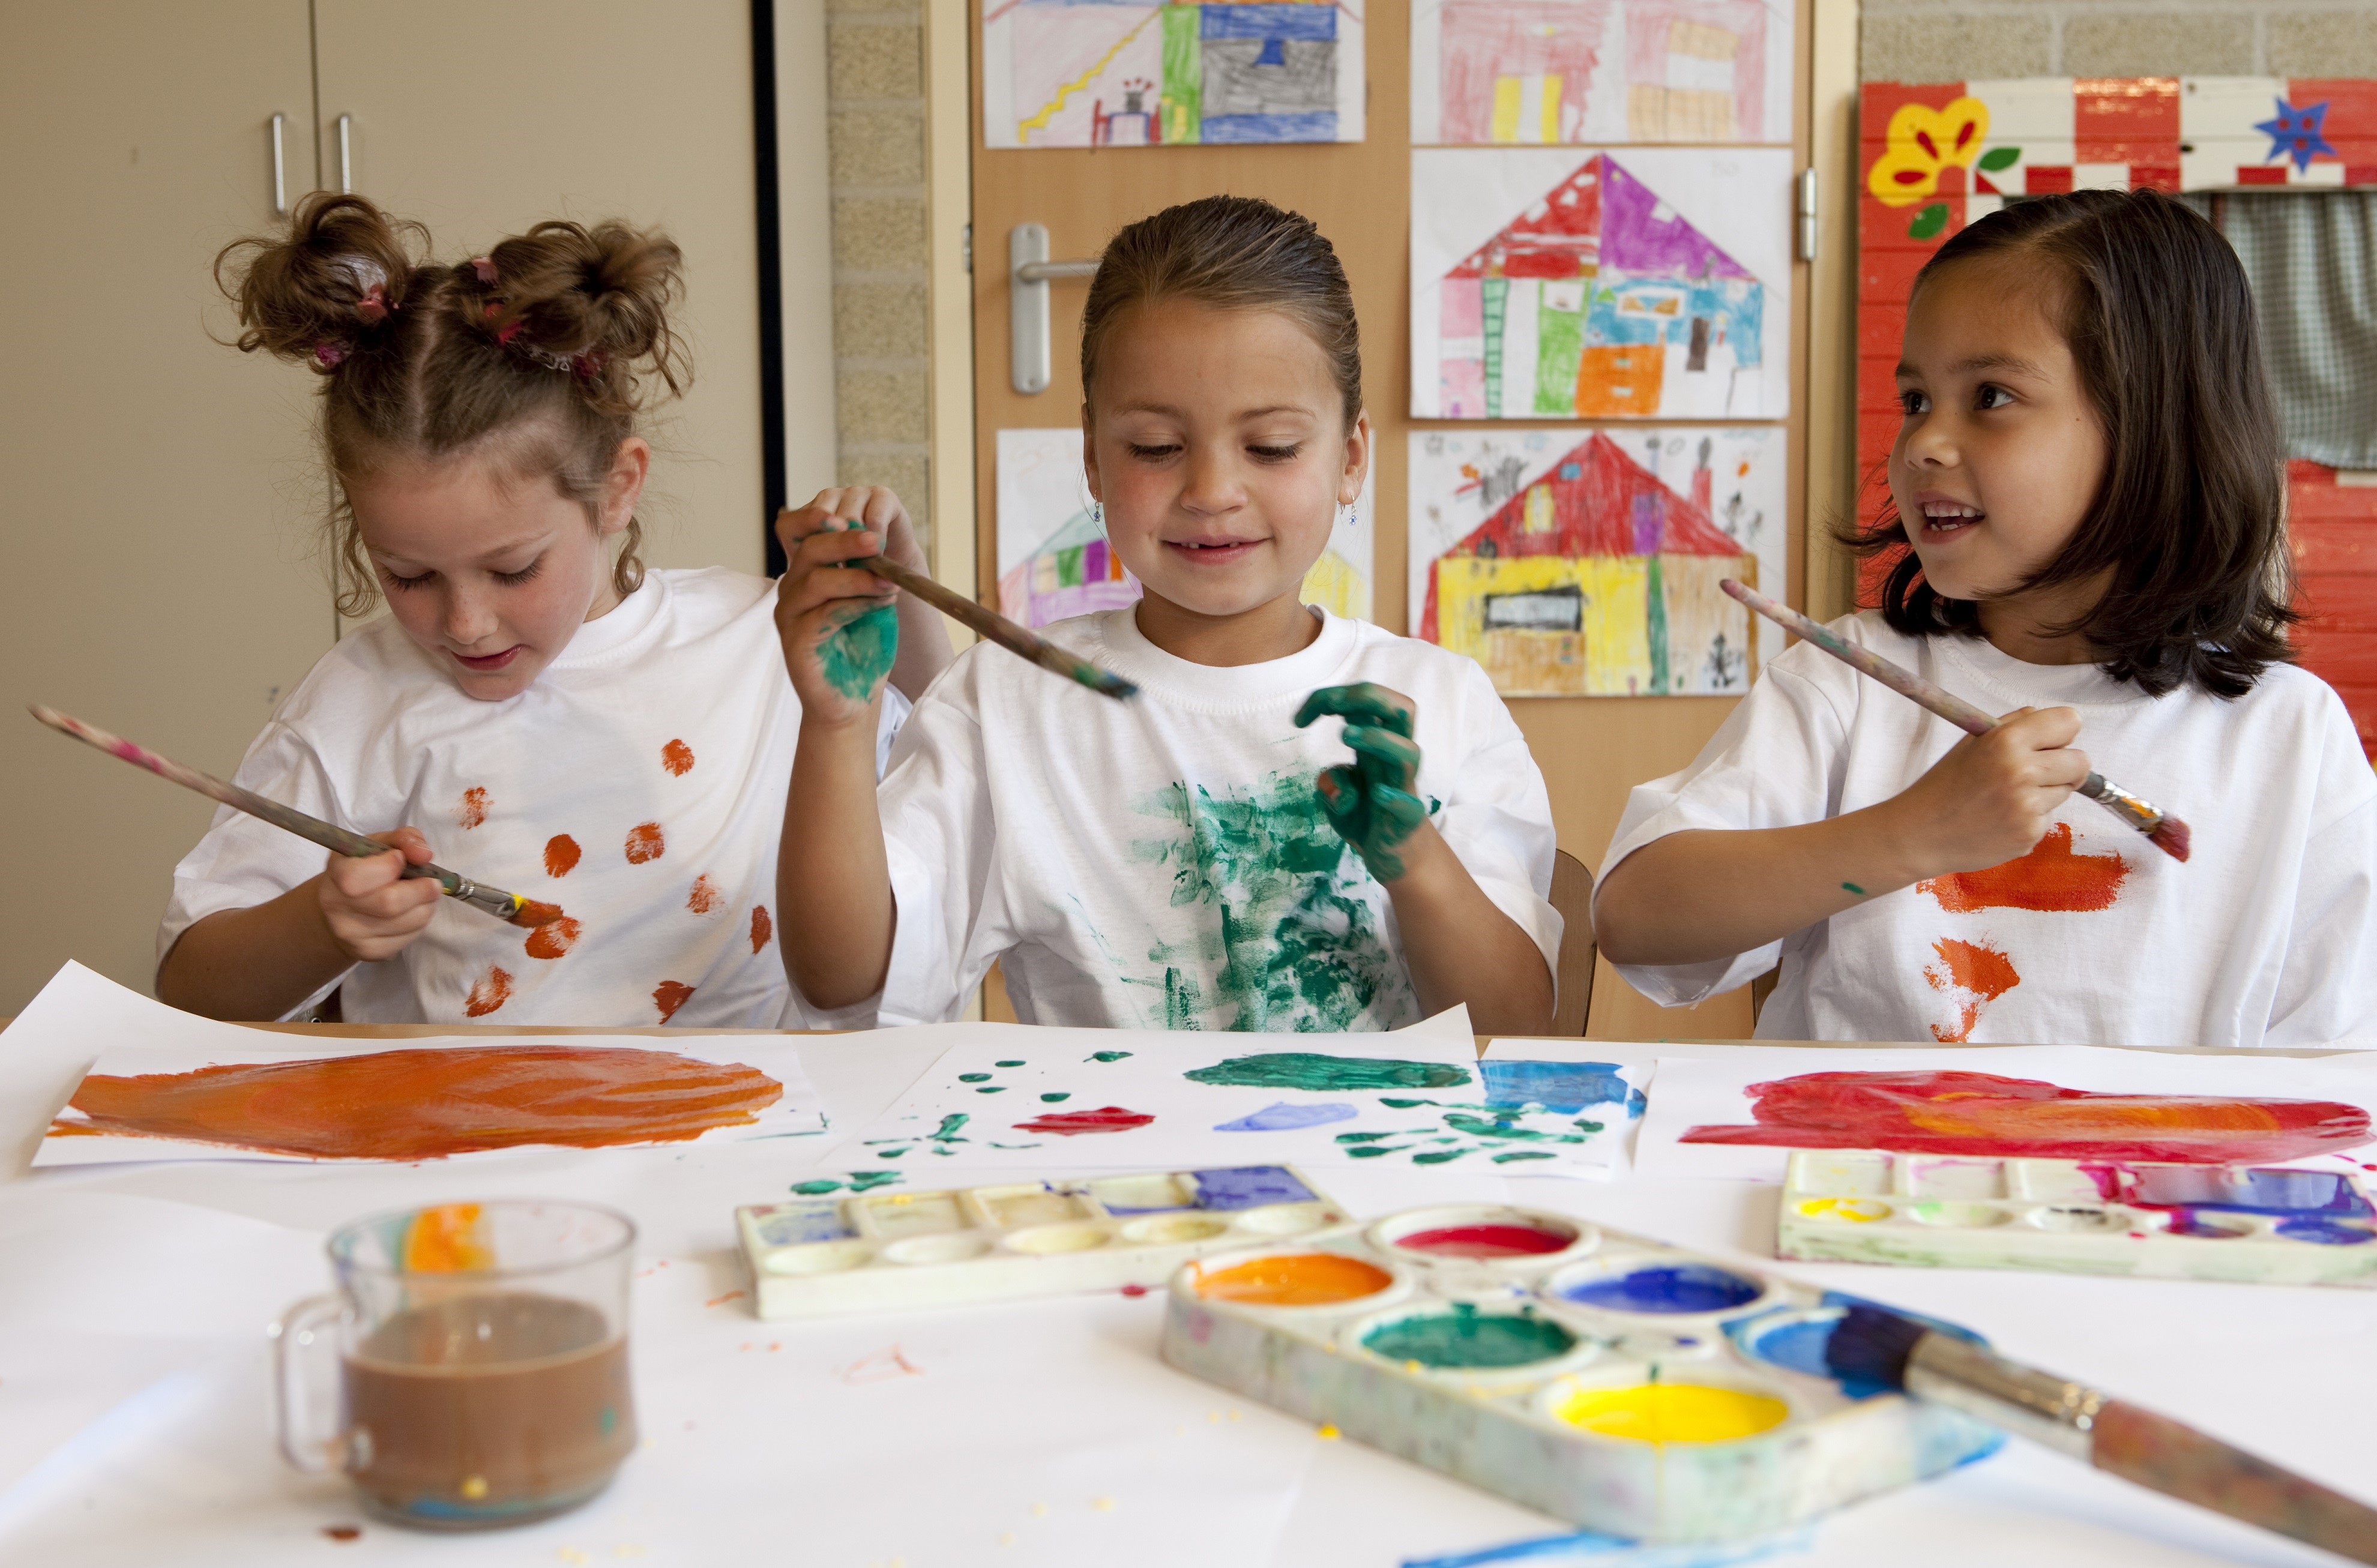 Children artists painting